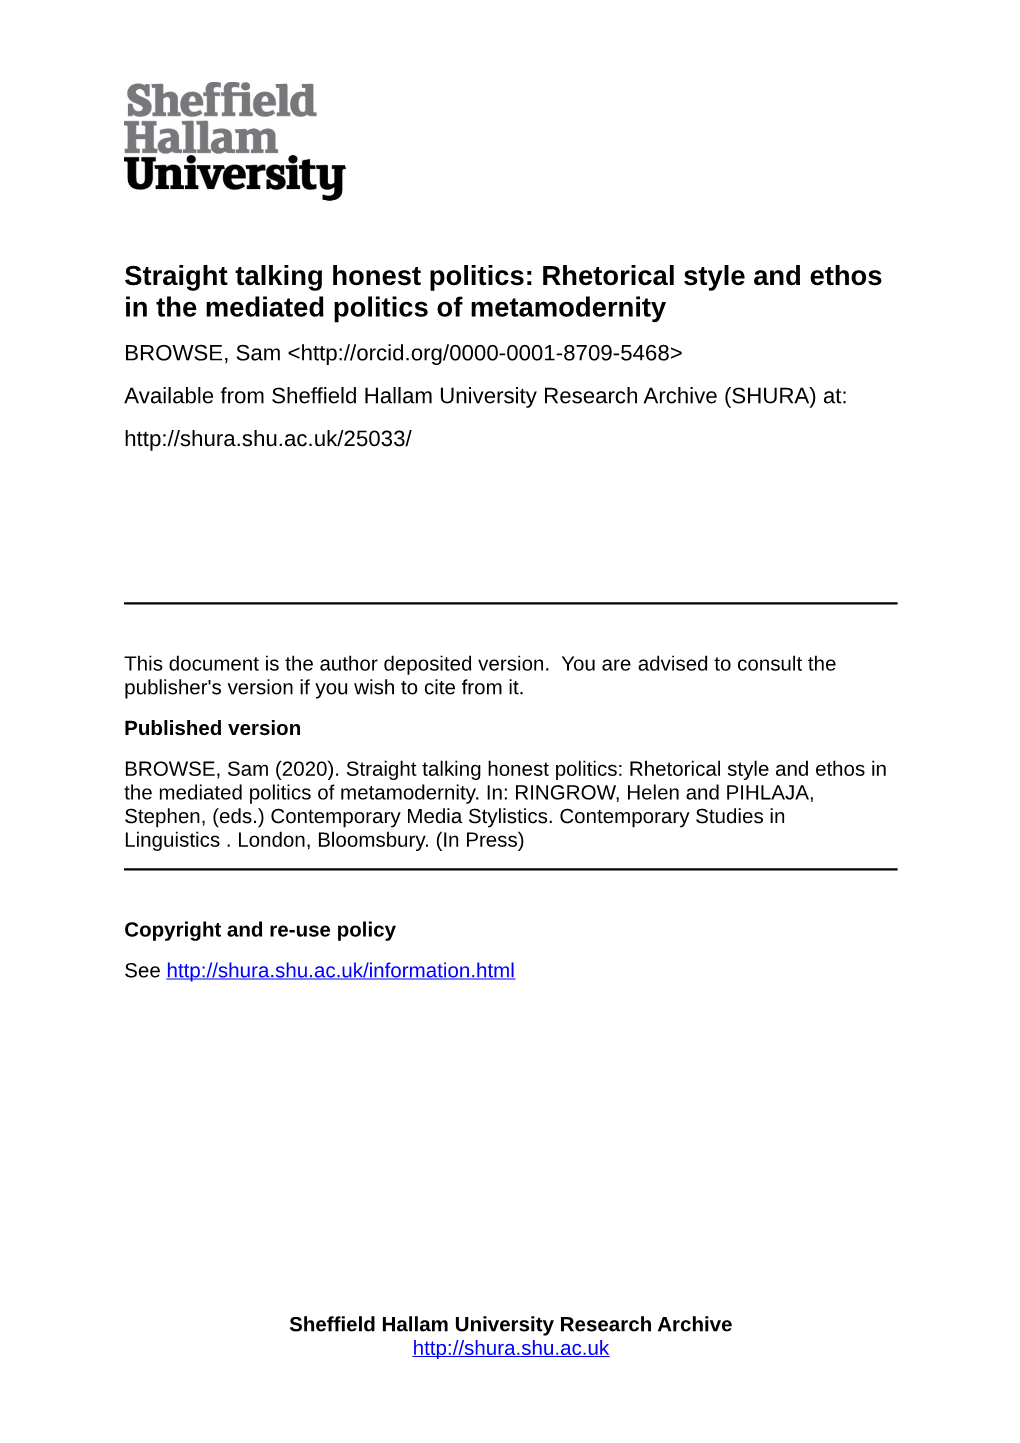 Straight Talking Honest Politics: Rhetorical Style and Ethos in the Mediated Politics of Metamodernity